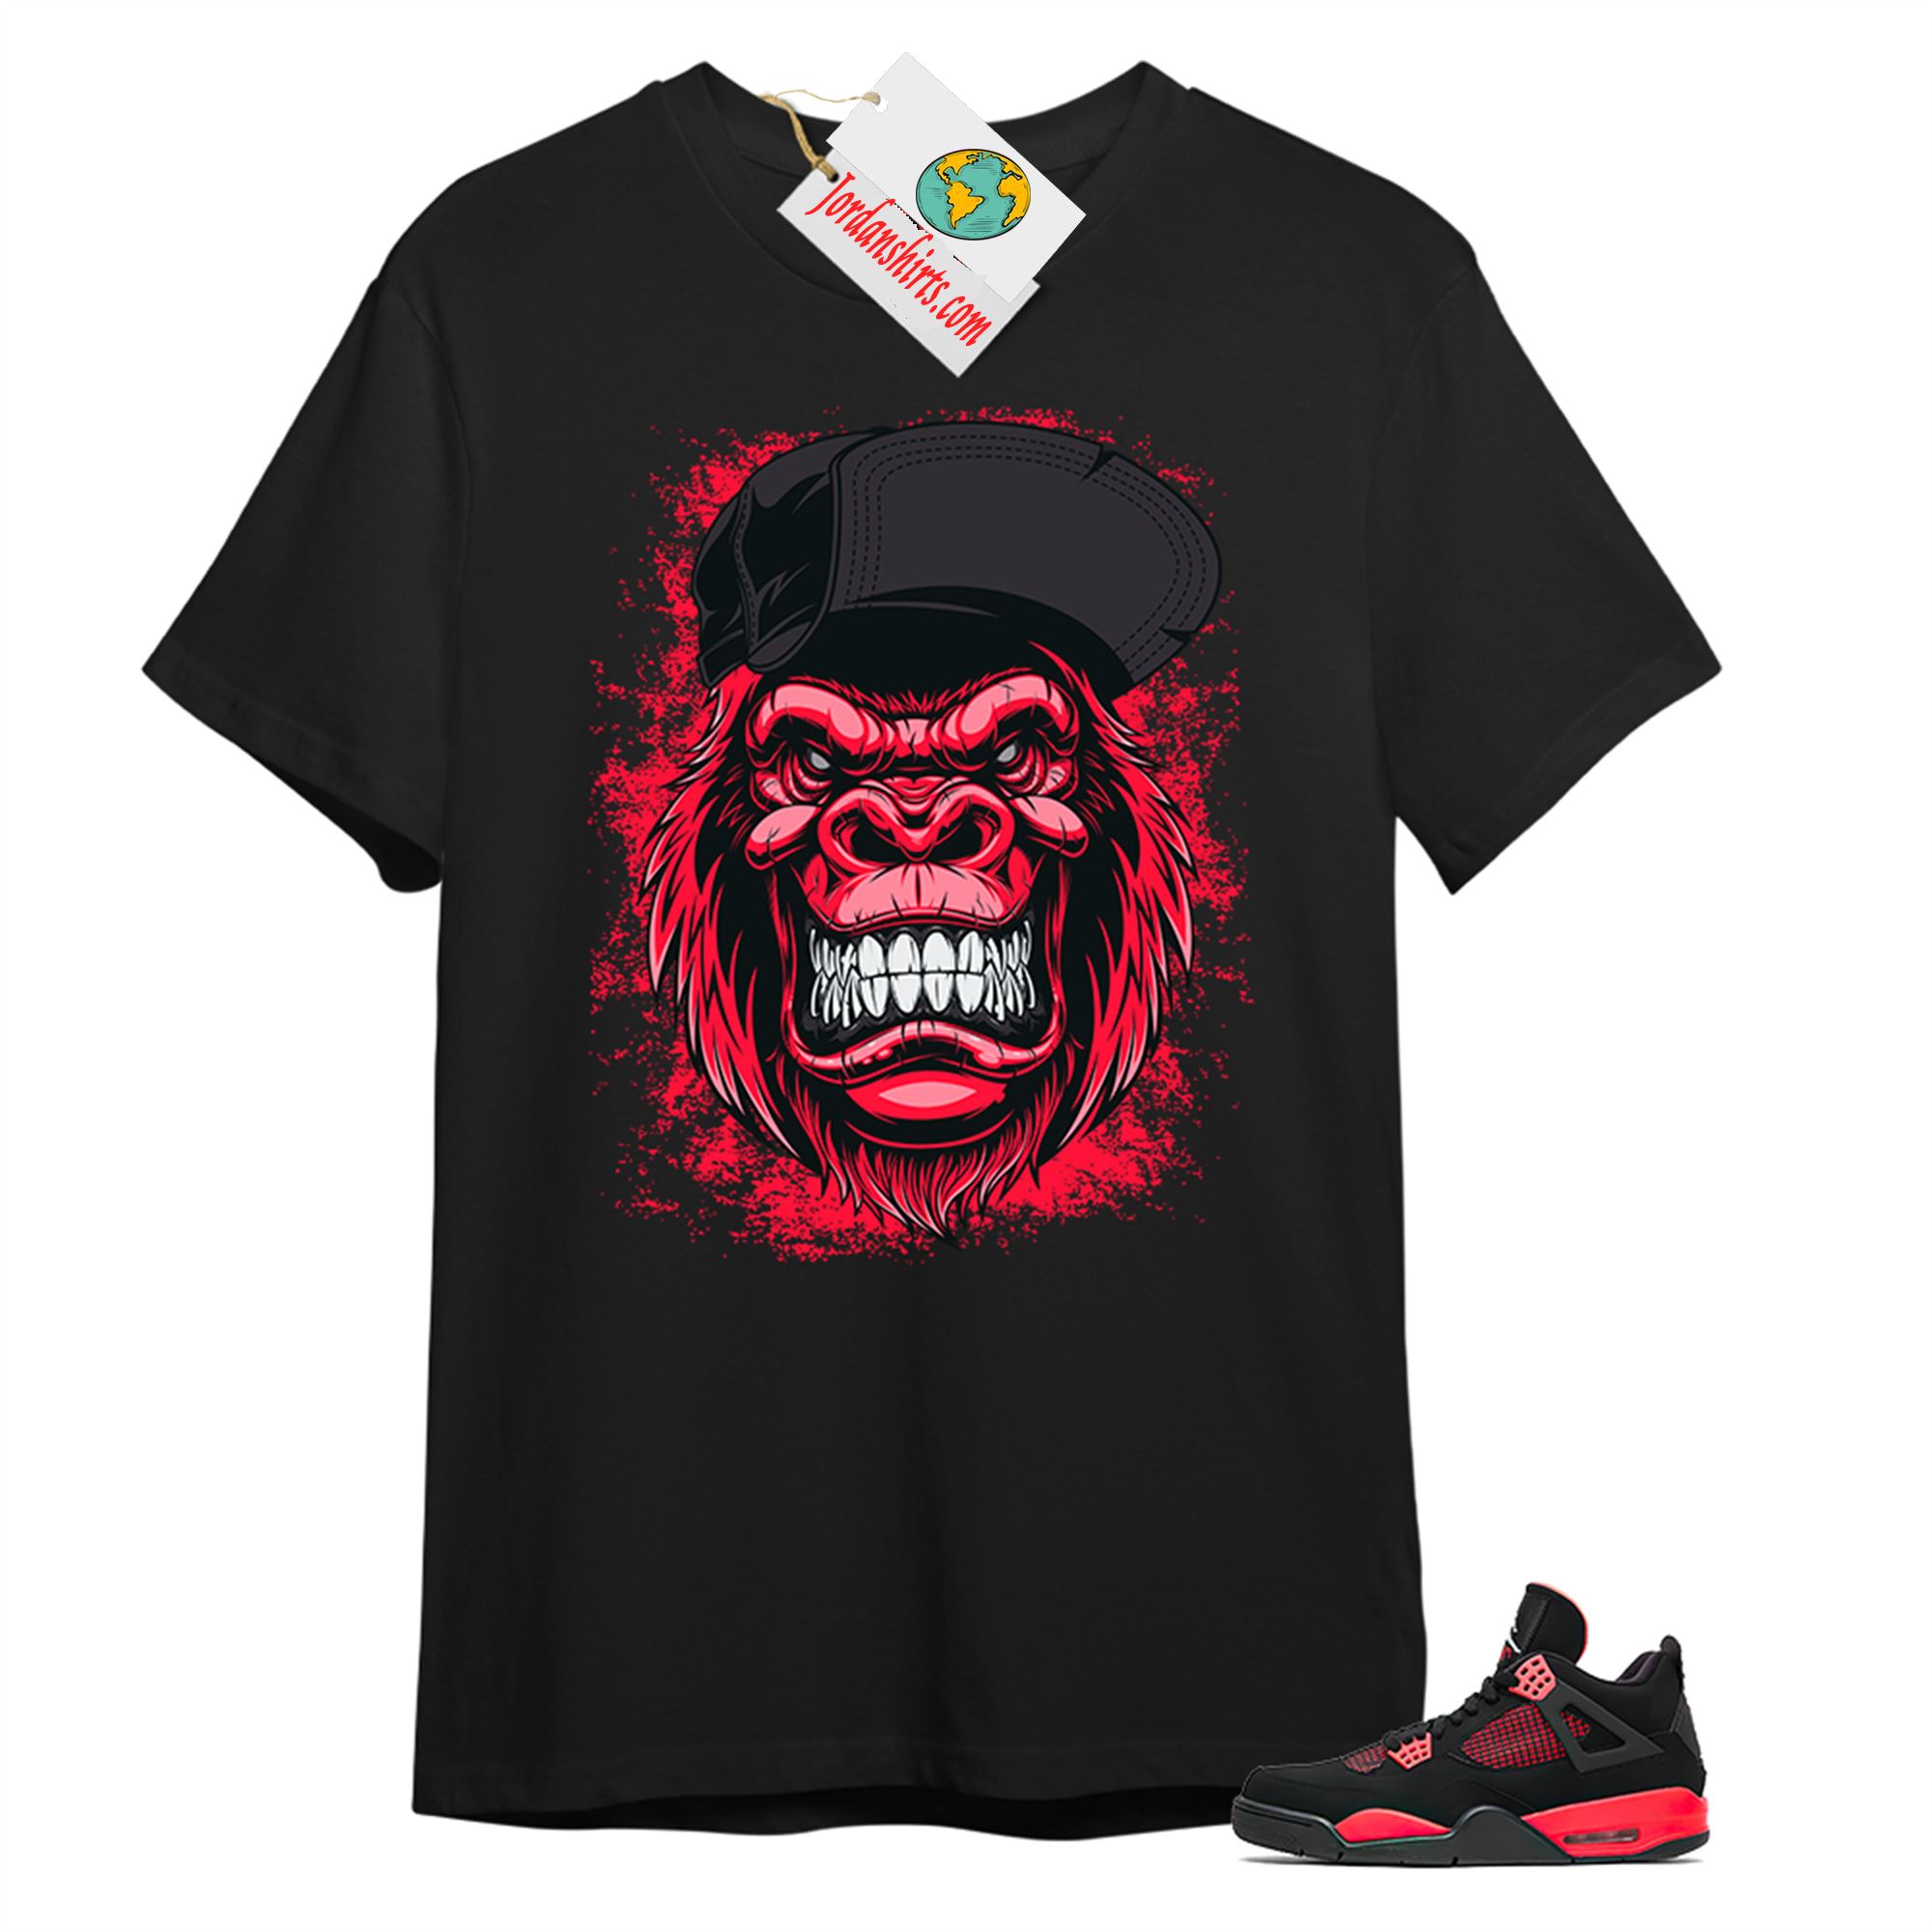 Jordan 4 Shirt, Ferocious Gorilla Black T-shirt Air Jordan 4 Red Thunder 4s Full Size Up To 5xl